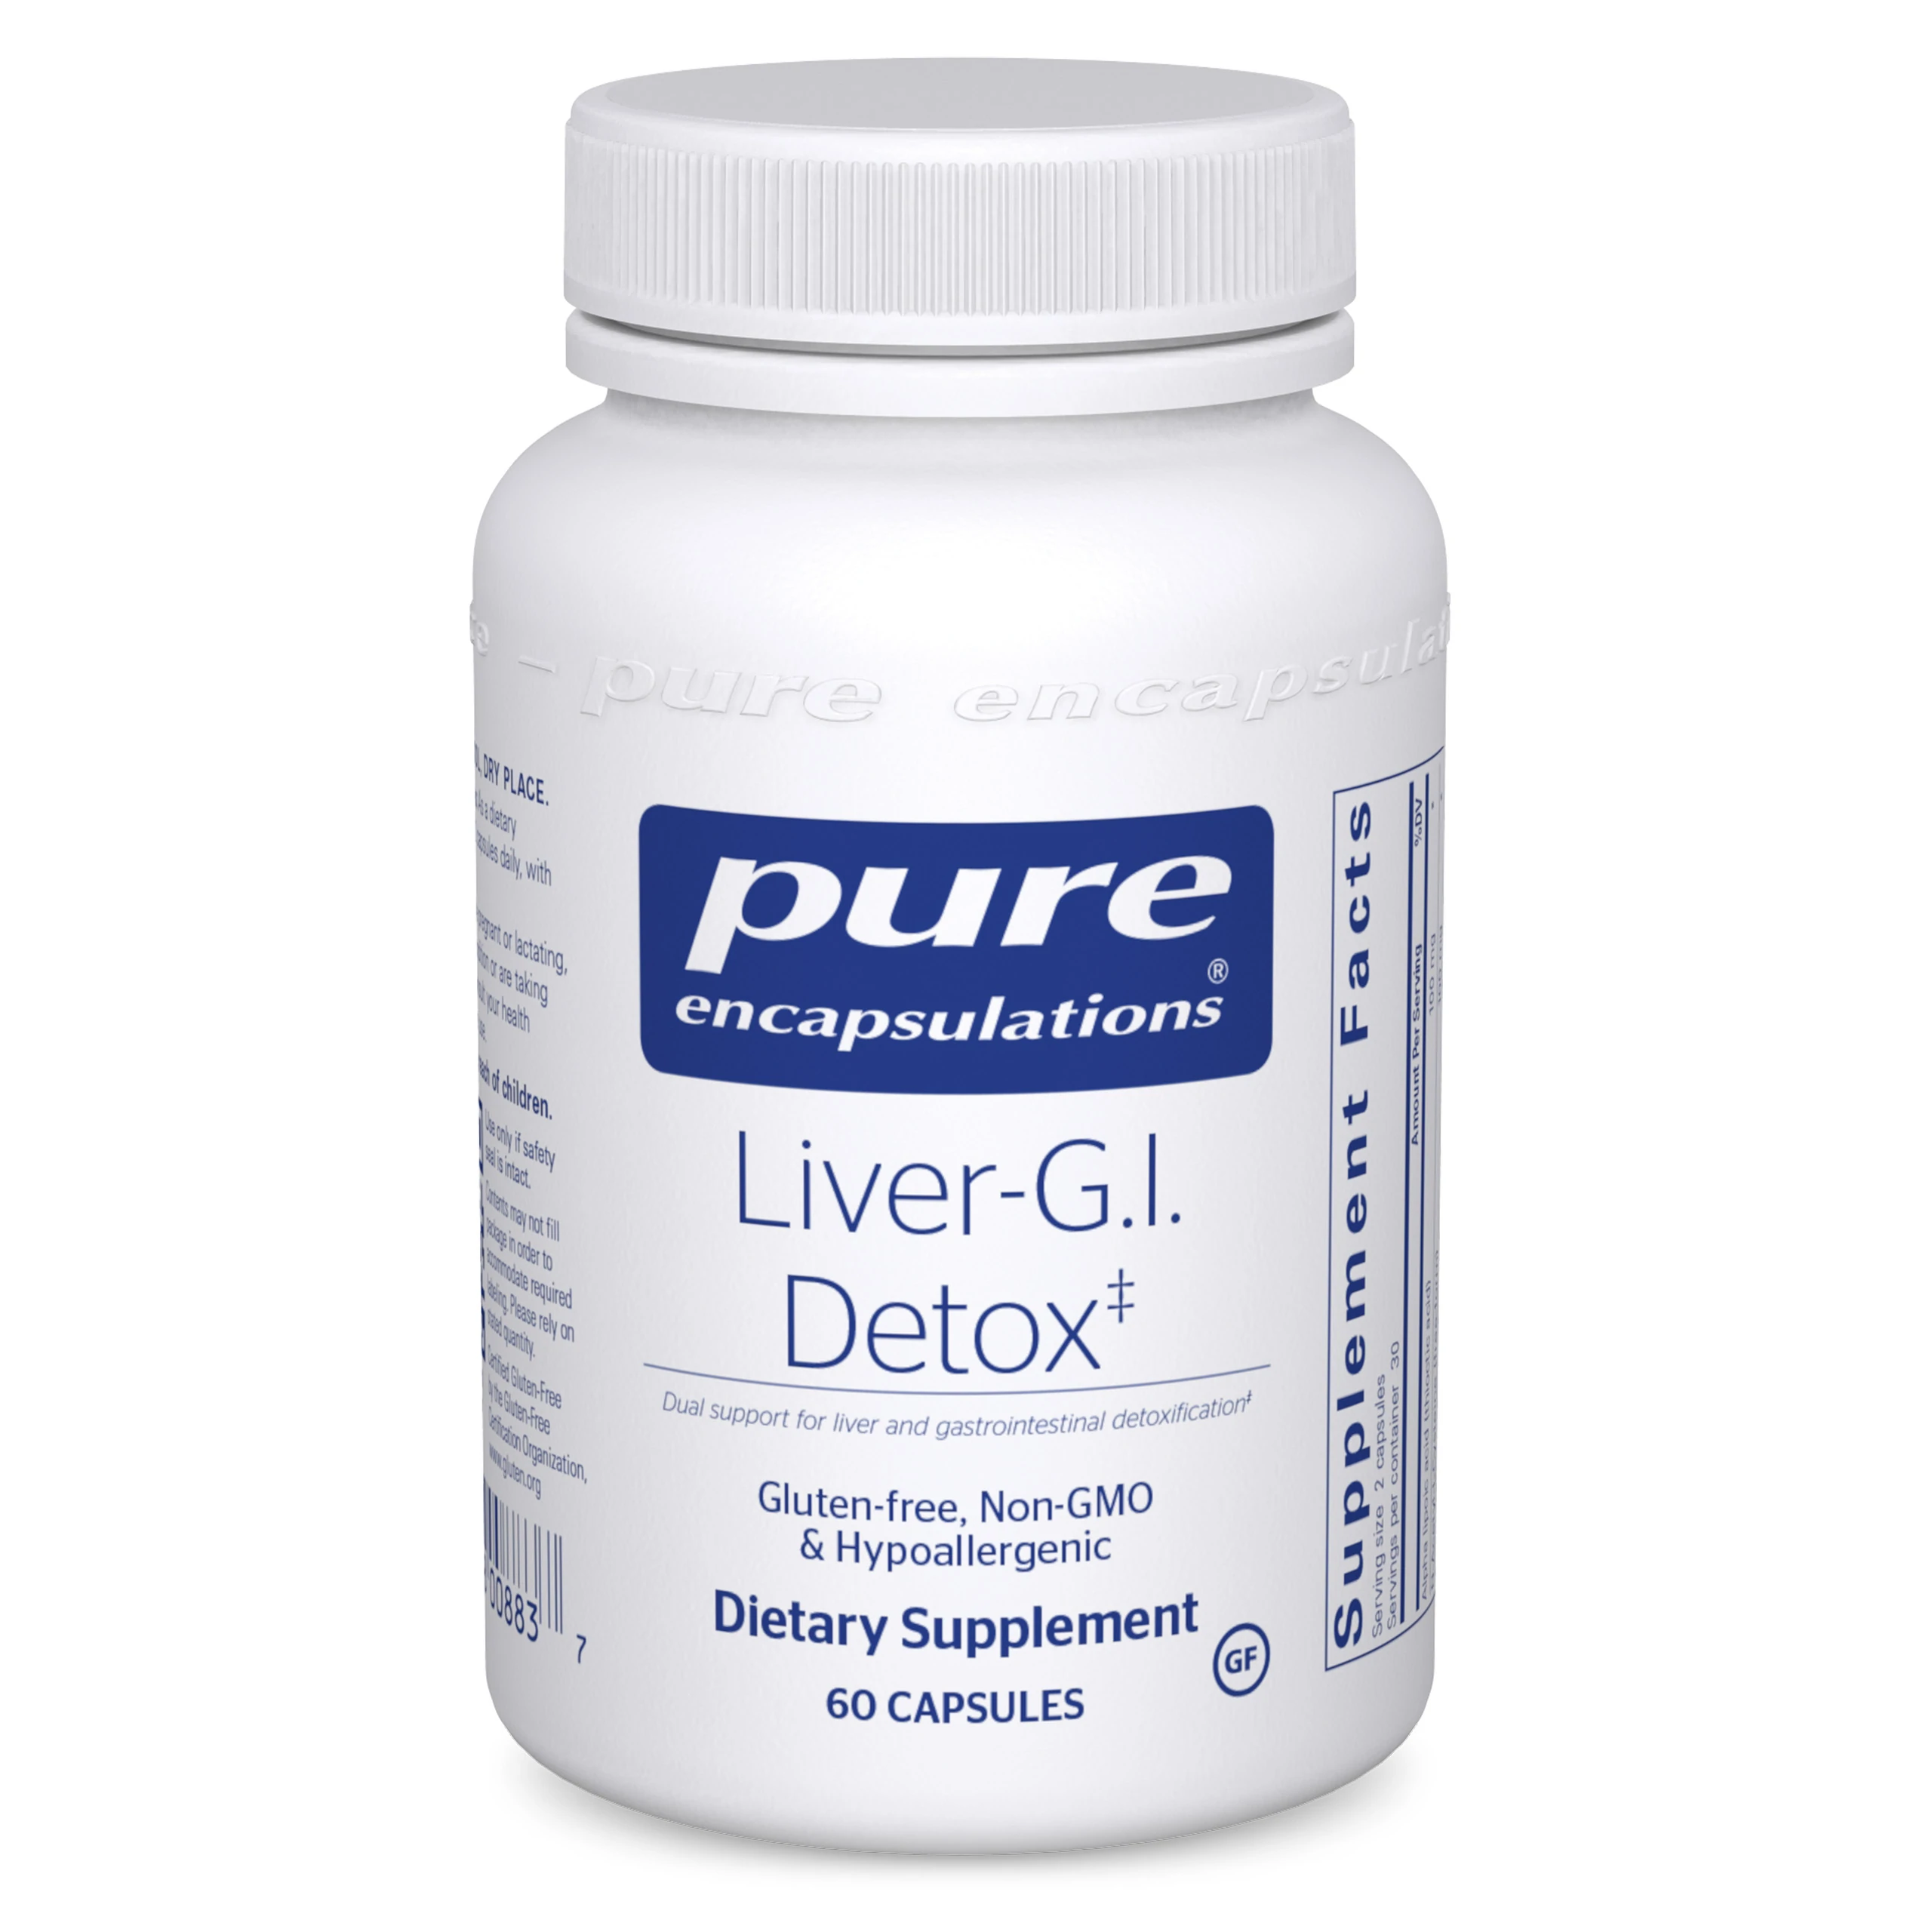 image of Pure Encapsulations Liver-G.I Detox 120 caps on white background